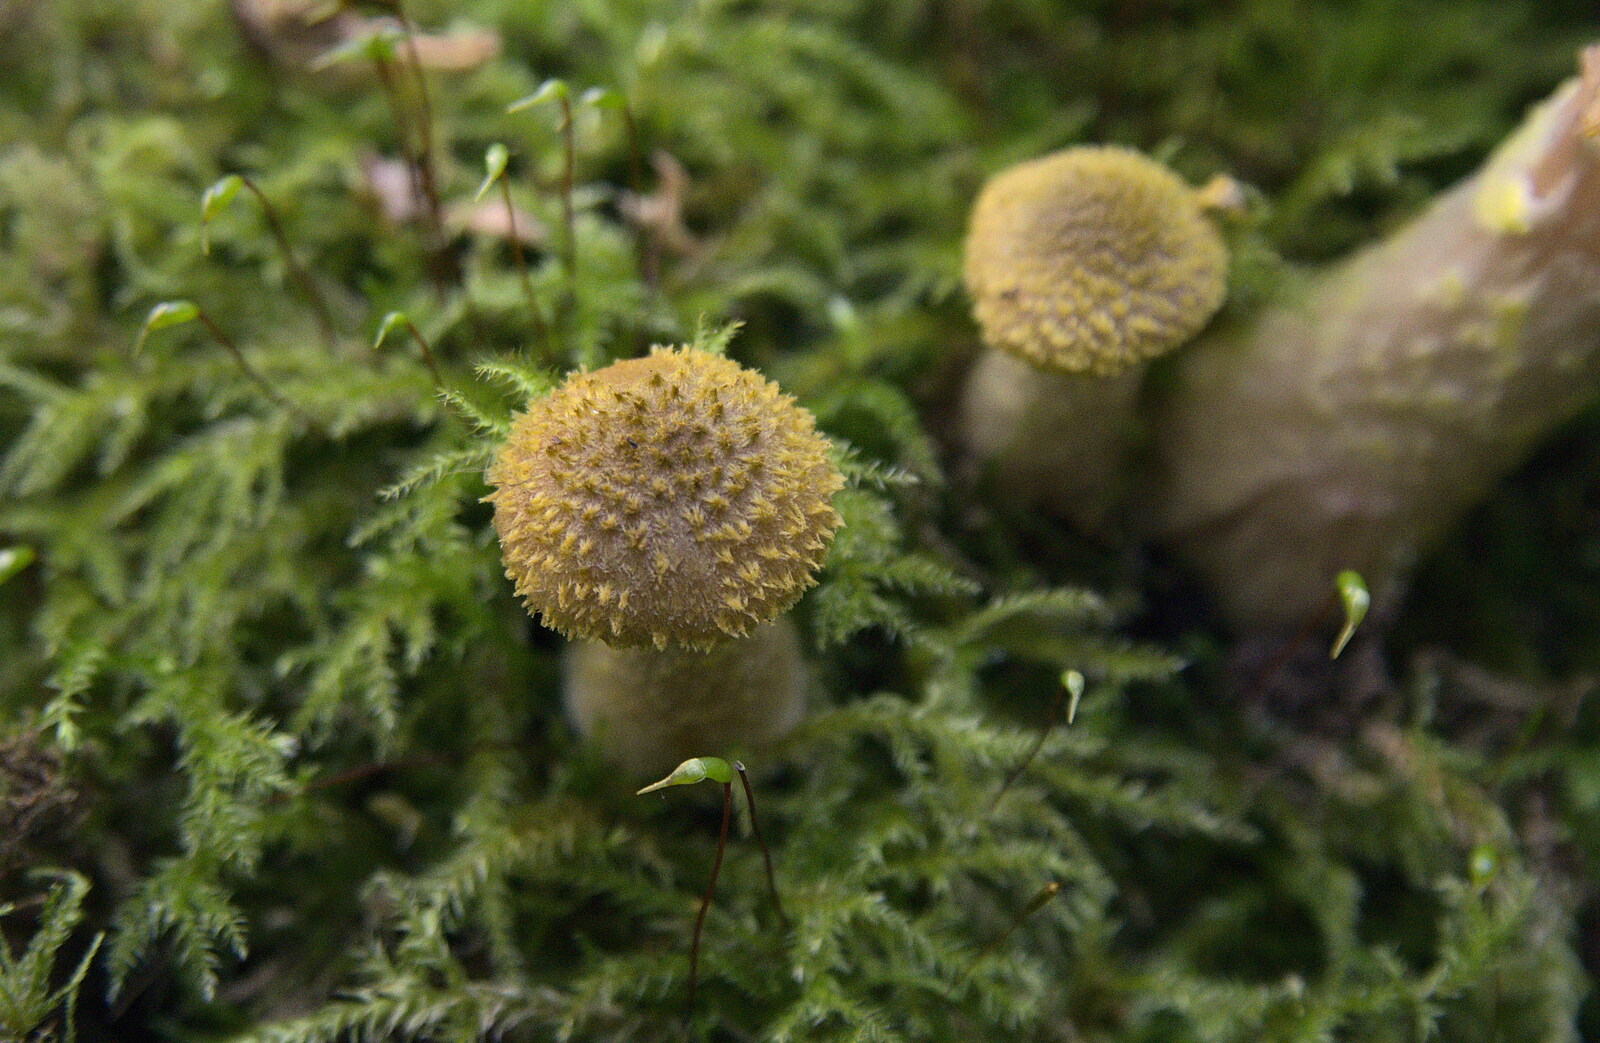 Squat punk mushrooms with spiky tops from The Mushrooms of Thornham Estate, Thornham, Suffolk - 4th October 2015